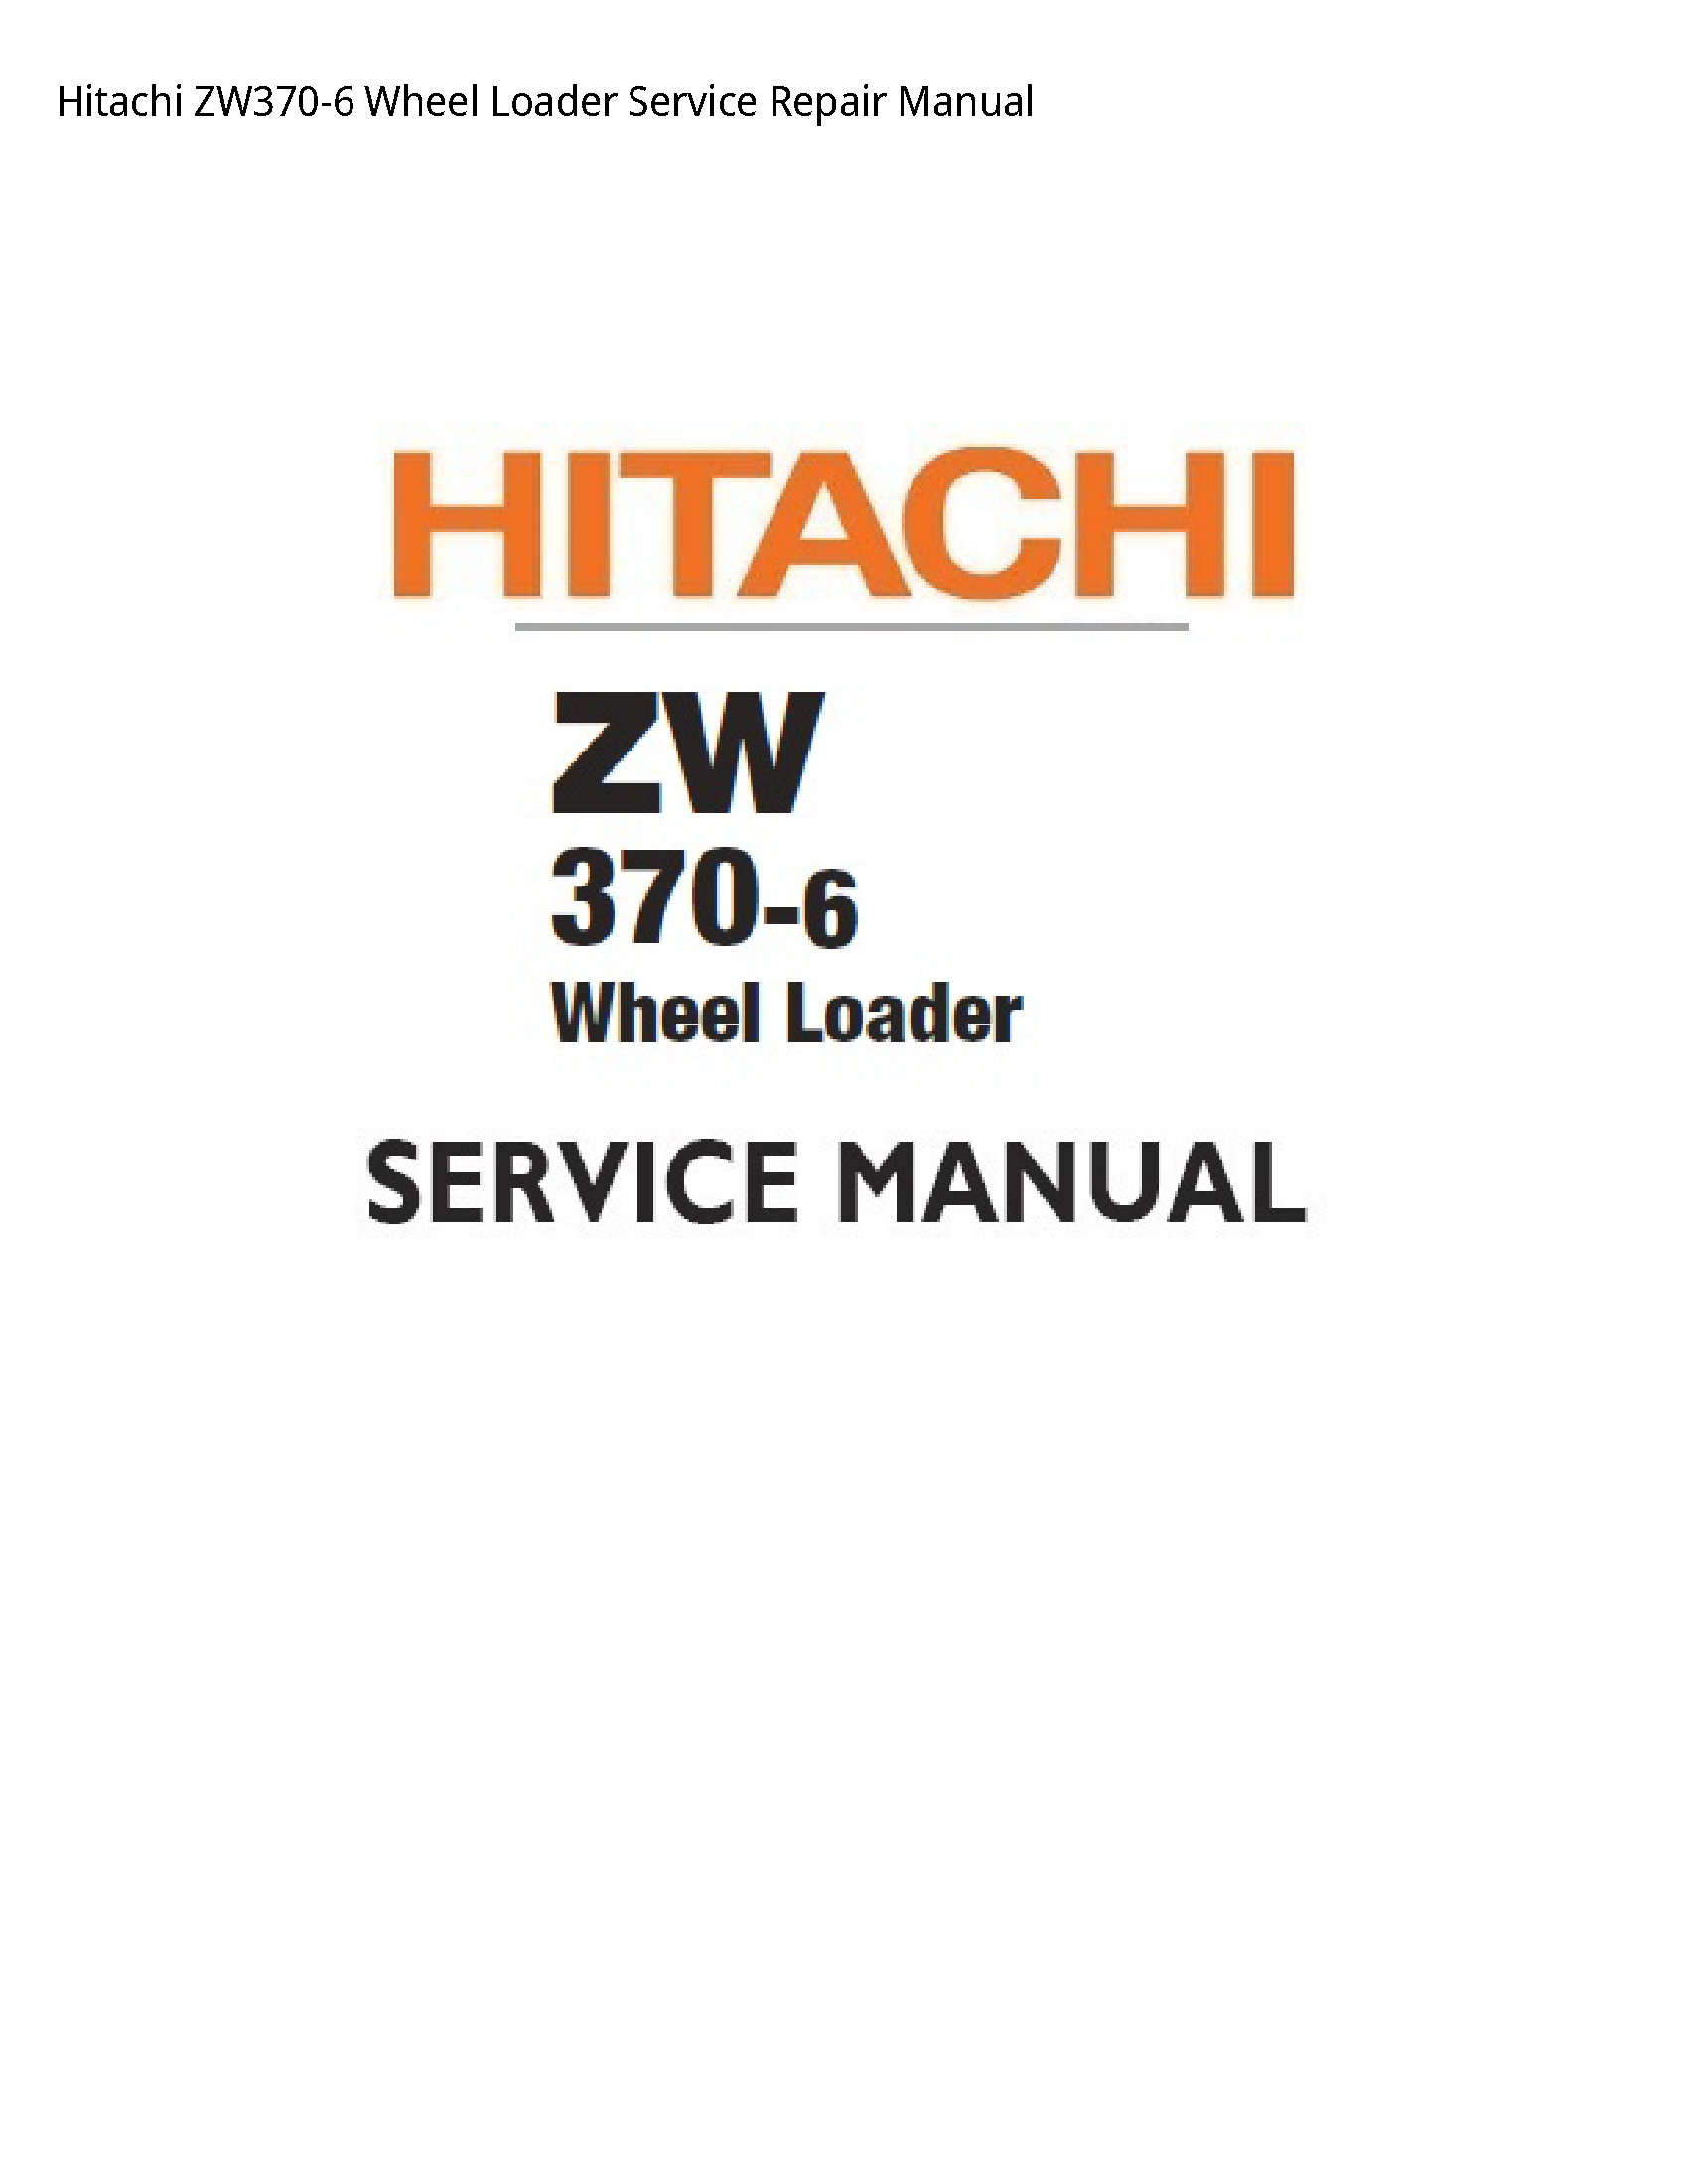 Hitachi ZW370-6 Wheel Loader manual